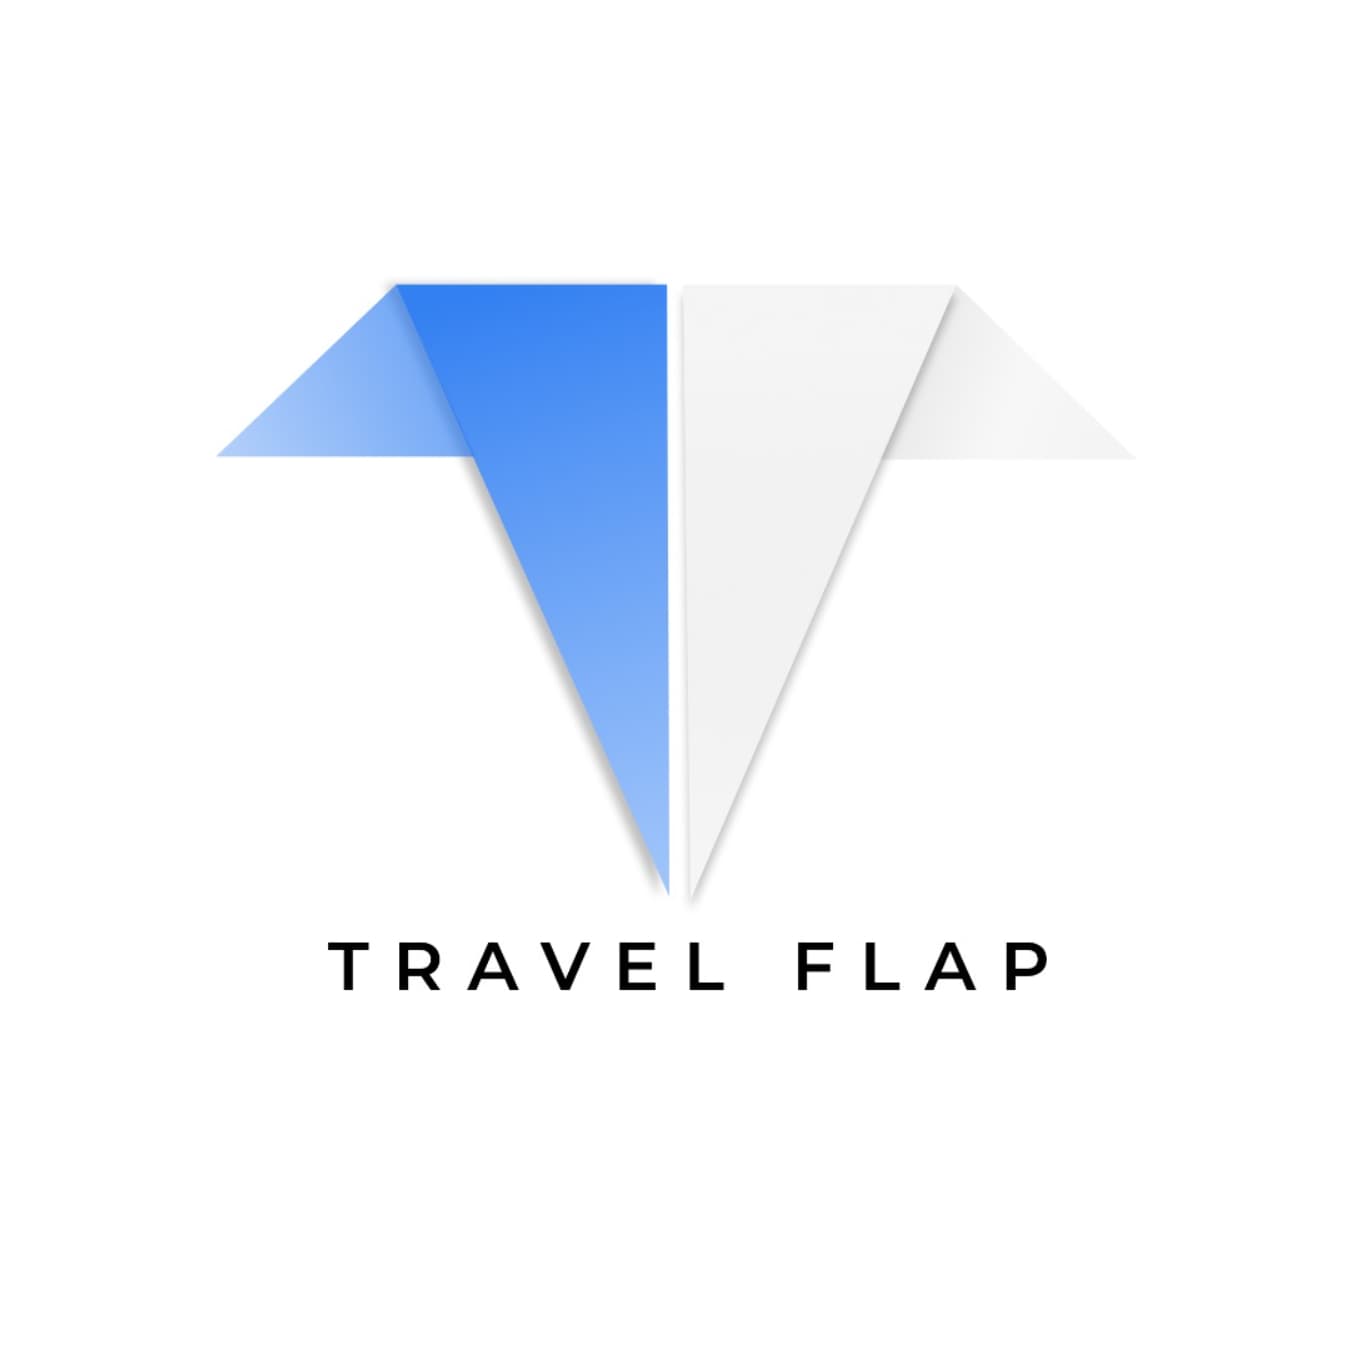 TravelFlap's logo